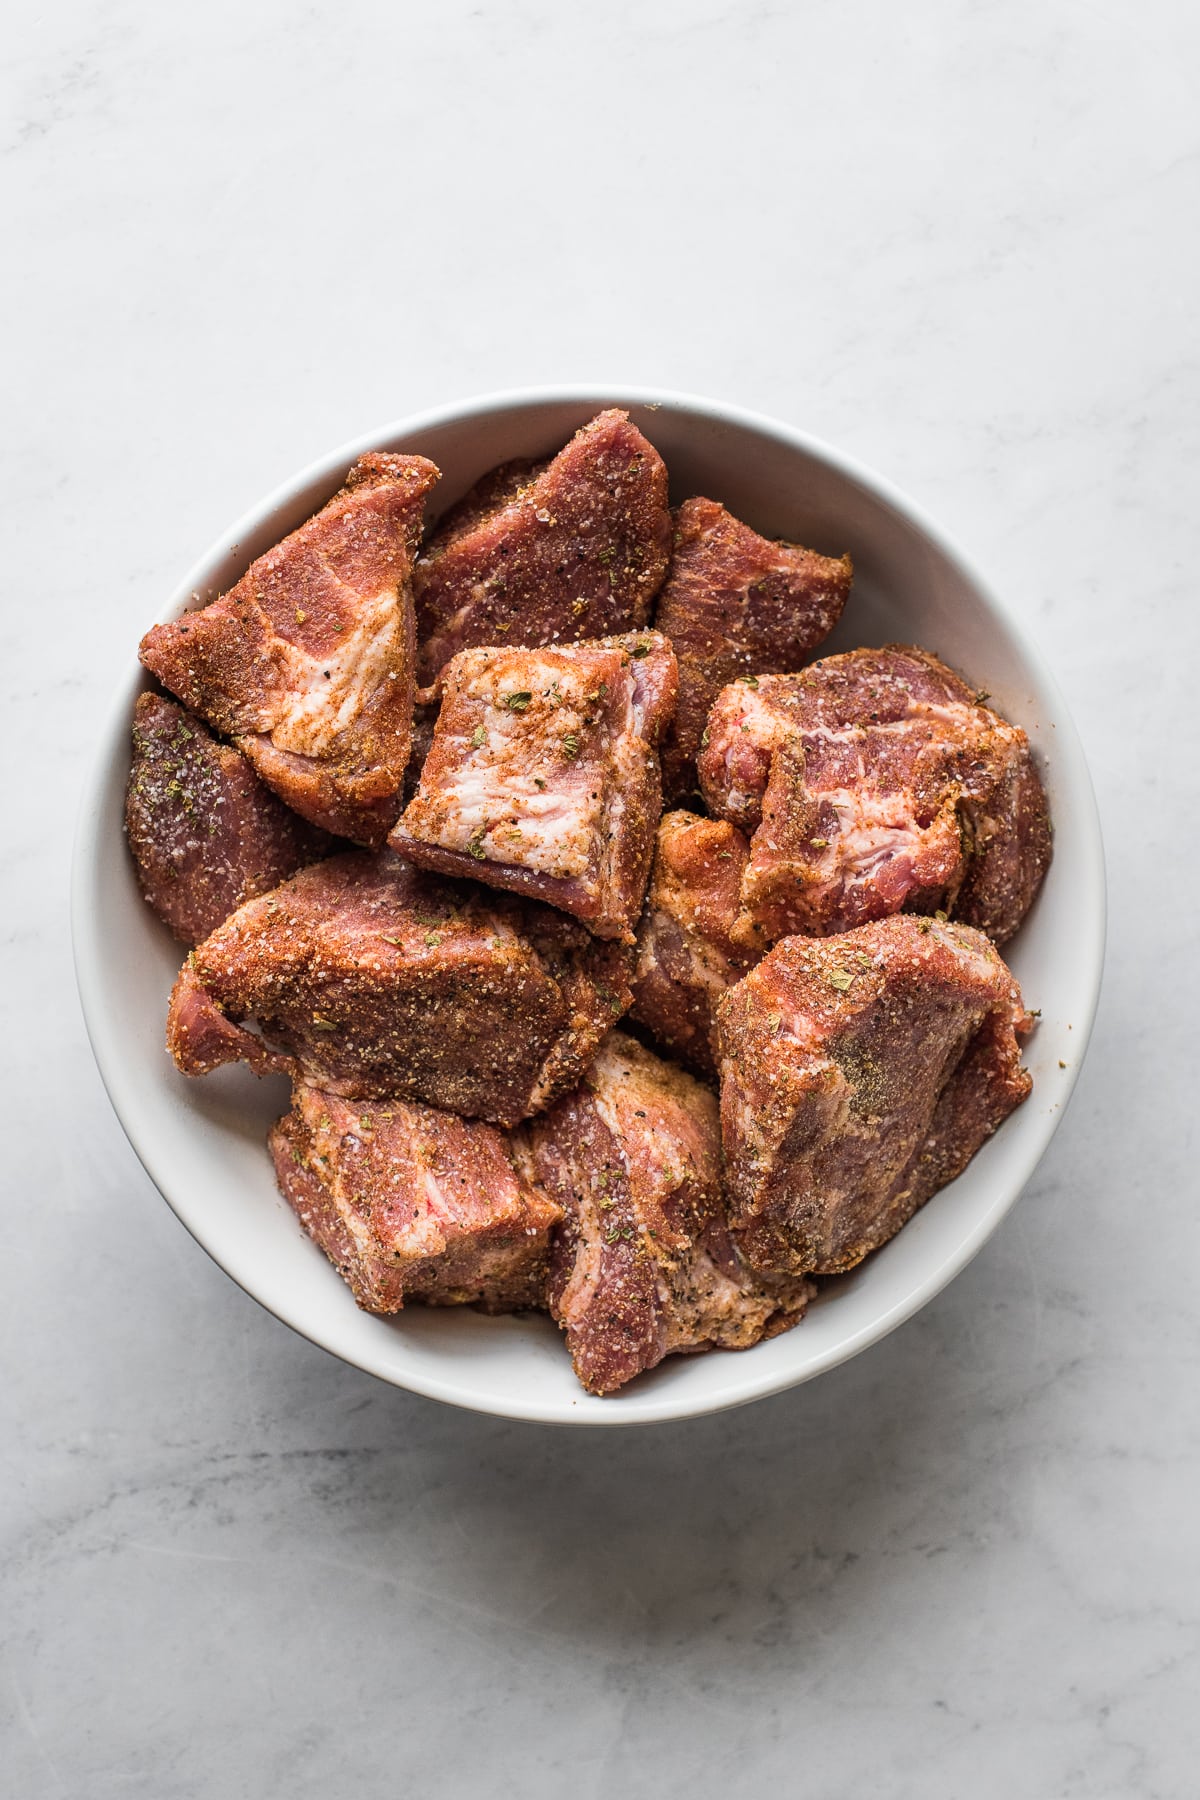 Seasoned pork shoulder cut into large chunks.